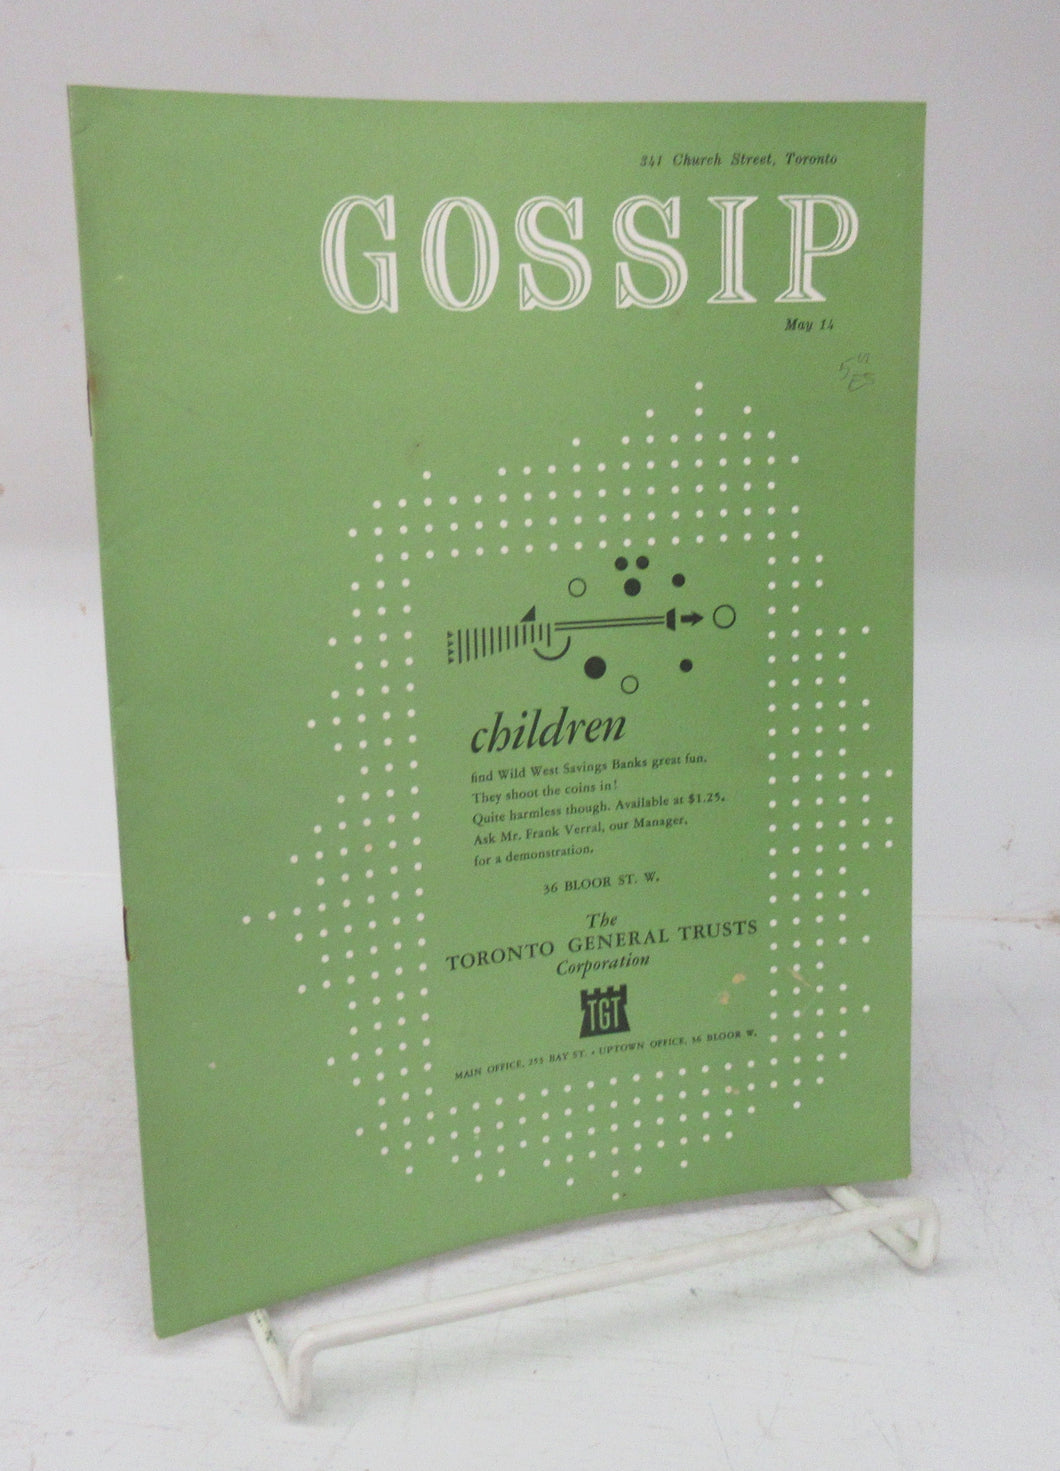 Gossip! May 14, 1960